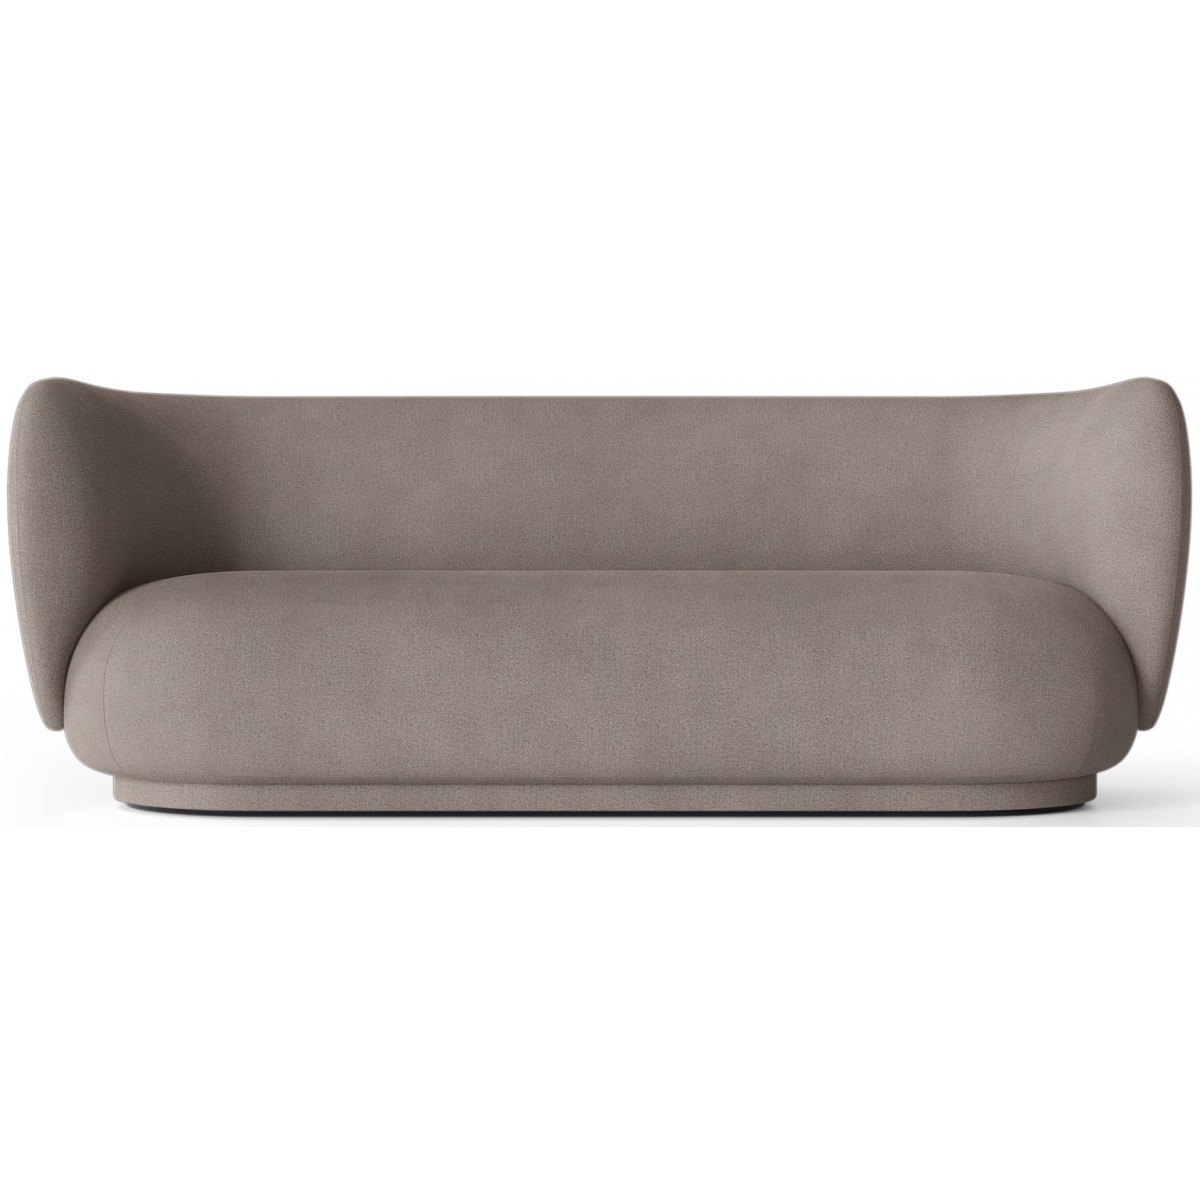 Rico 3-seater sofa – Brushed warm grey